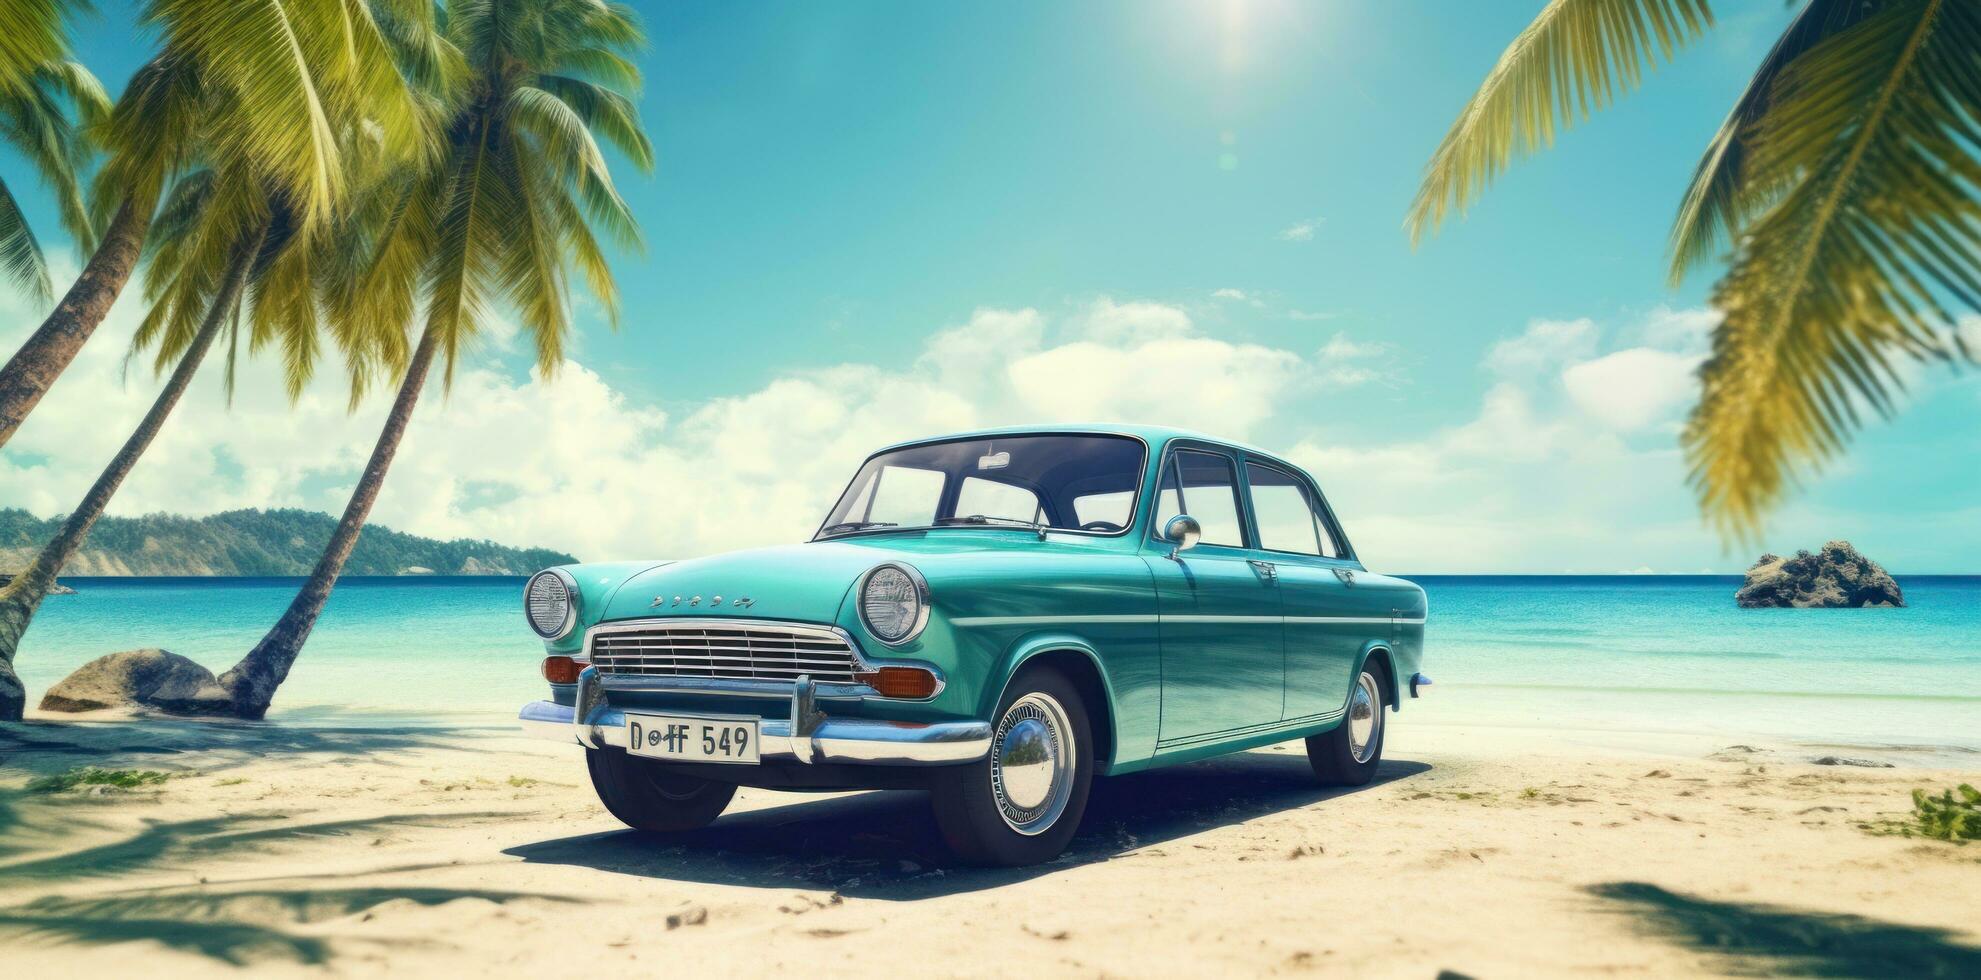 linda retro playa coche foto